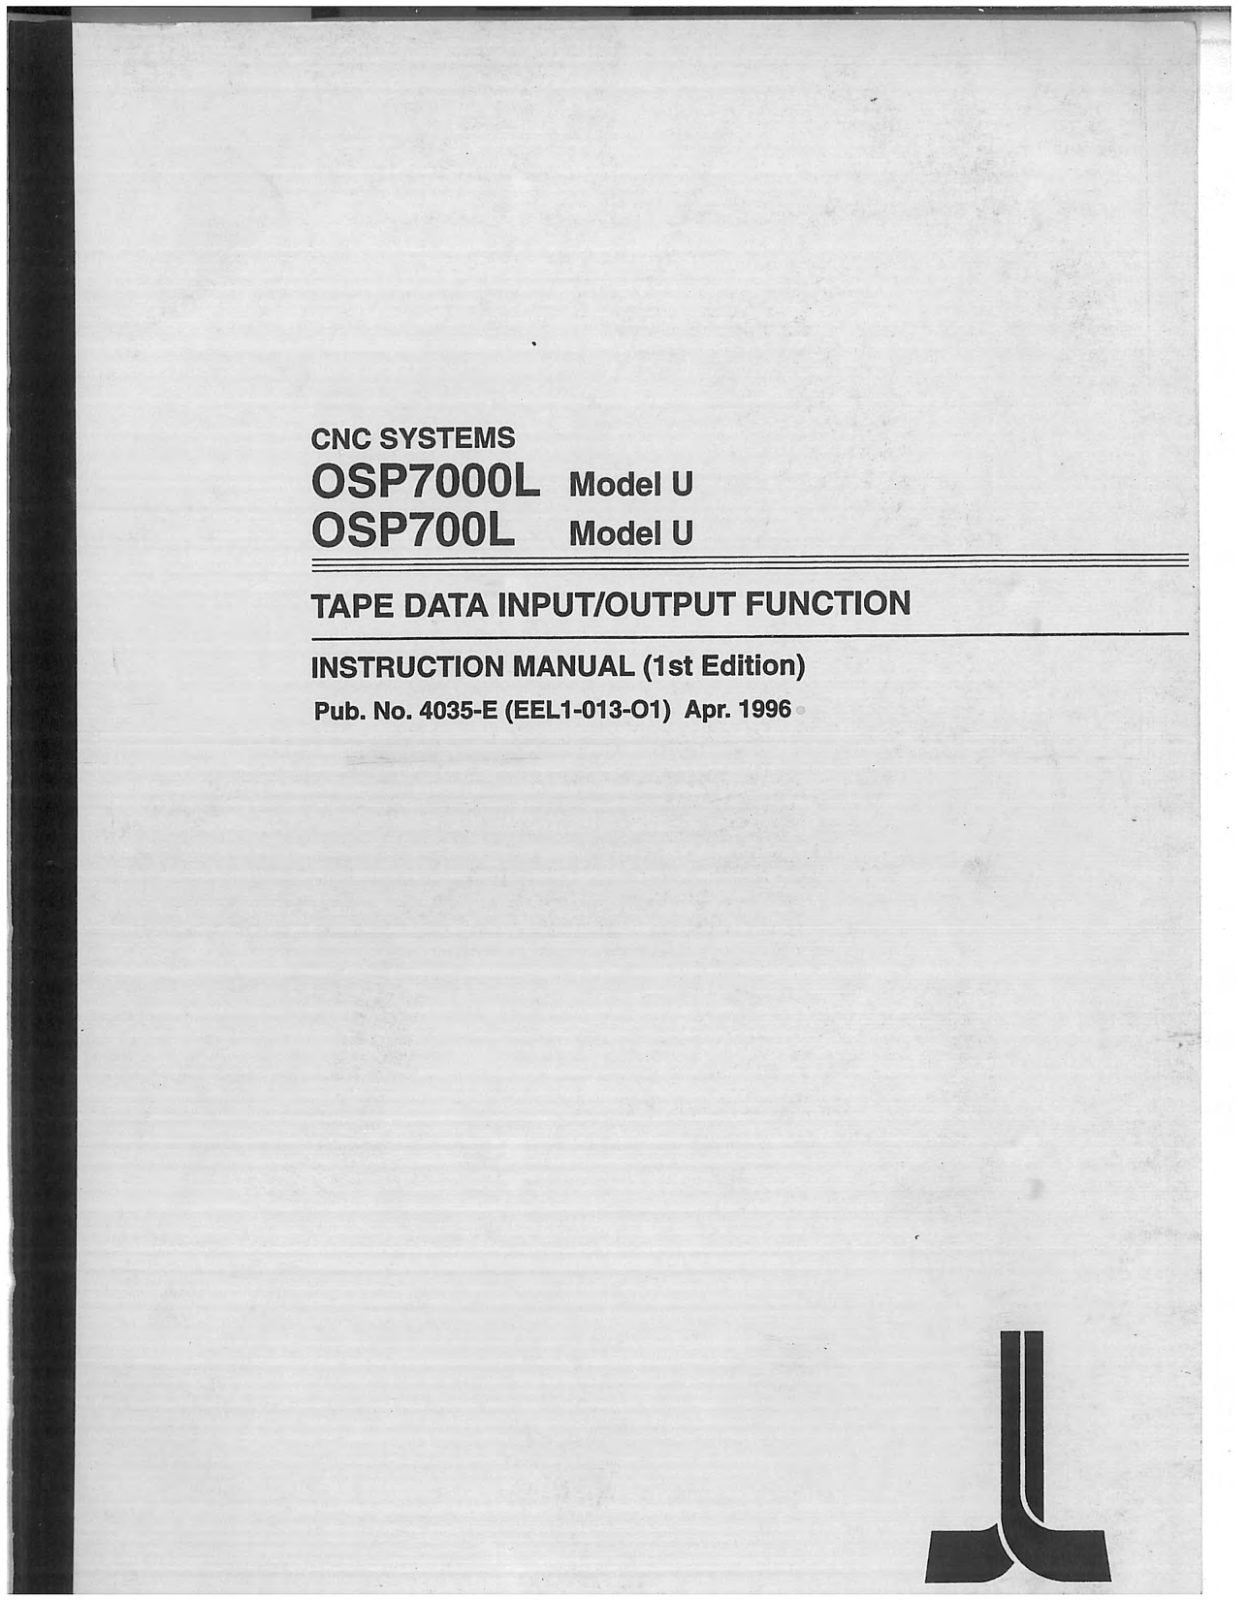 okuma OSP7000L u Instruction Manual